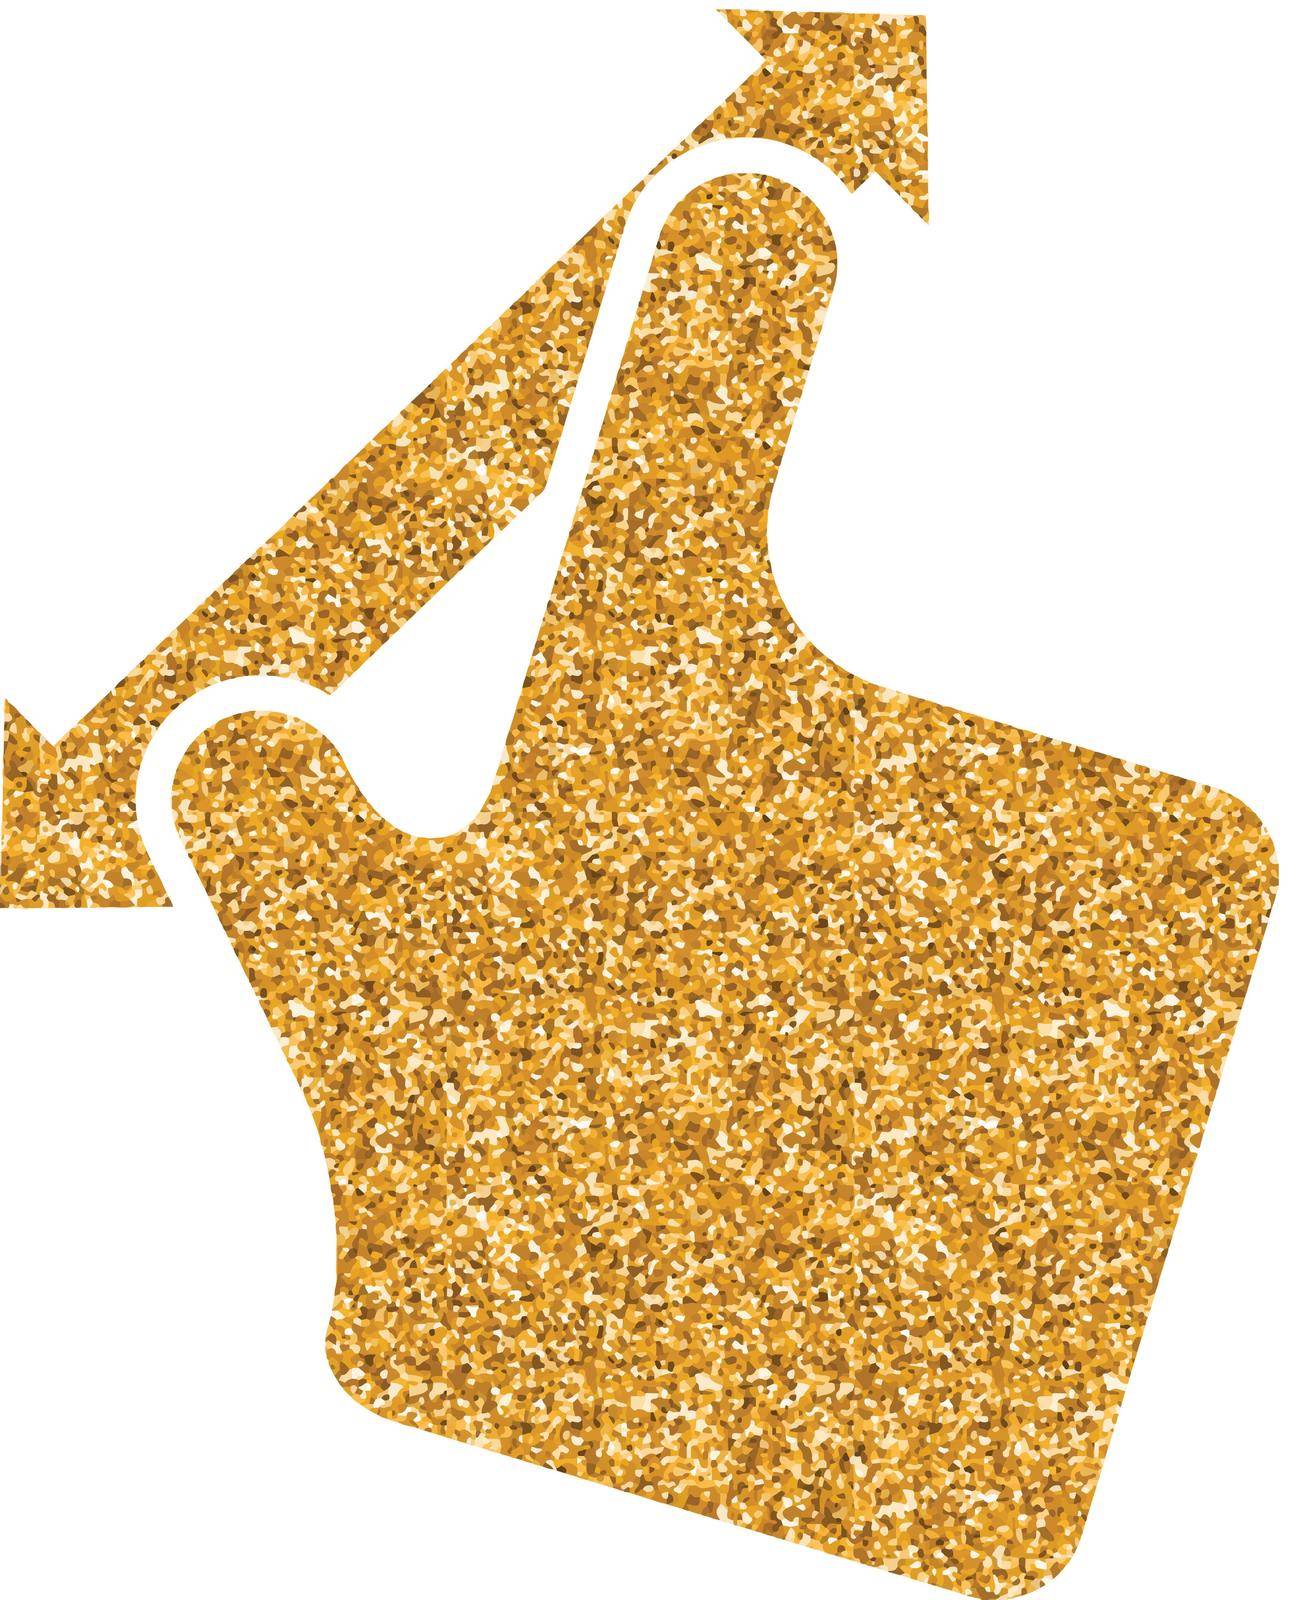 Finger gesture icon in gold glitter texture. Sparkle luxury style vector illustration.